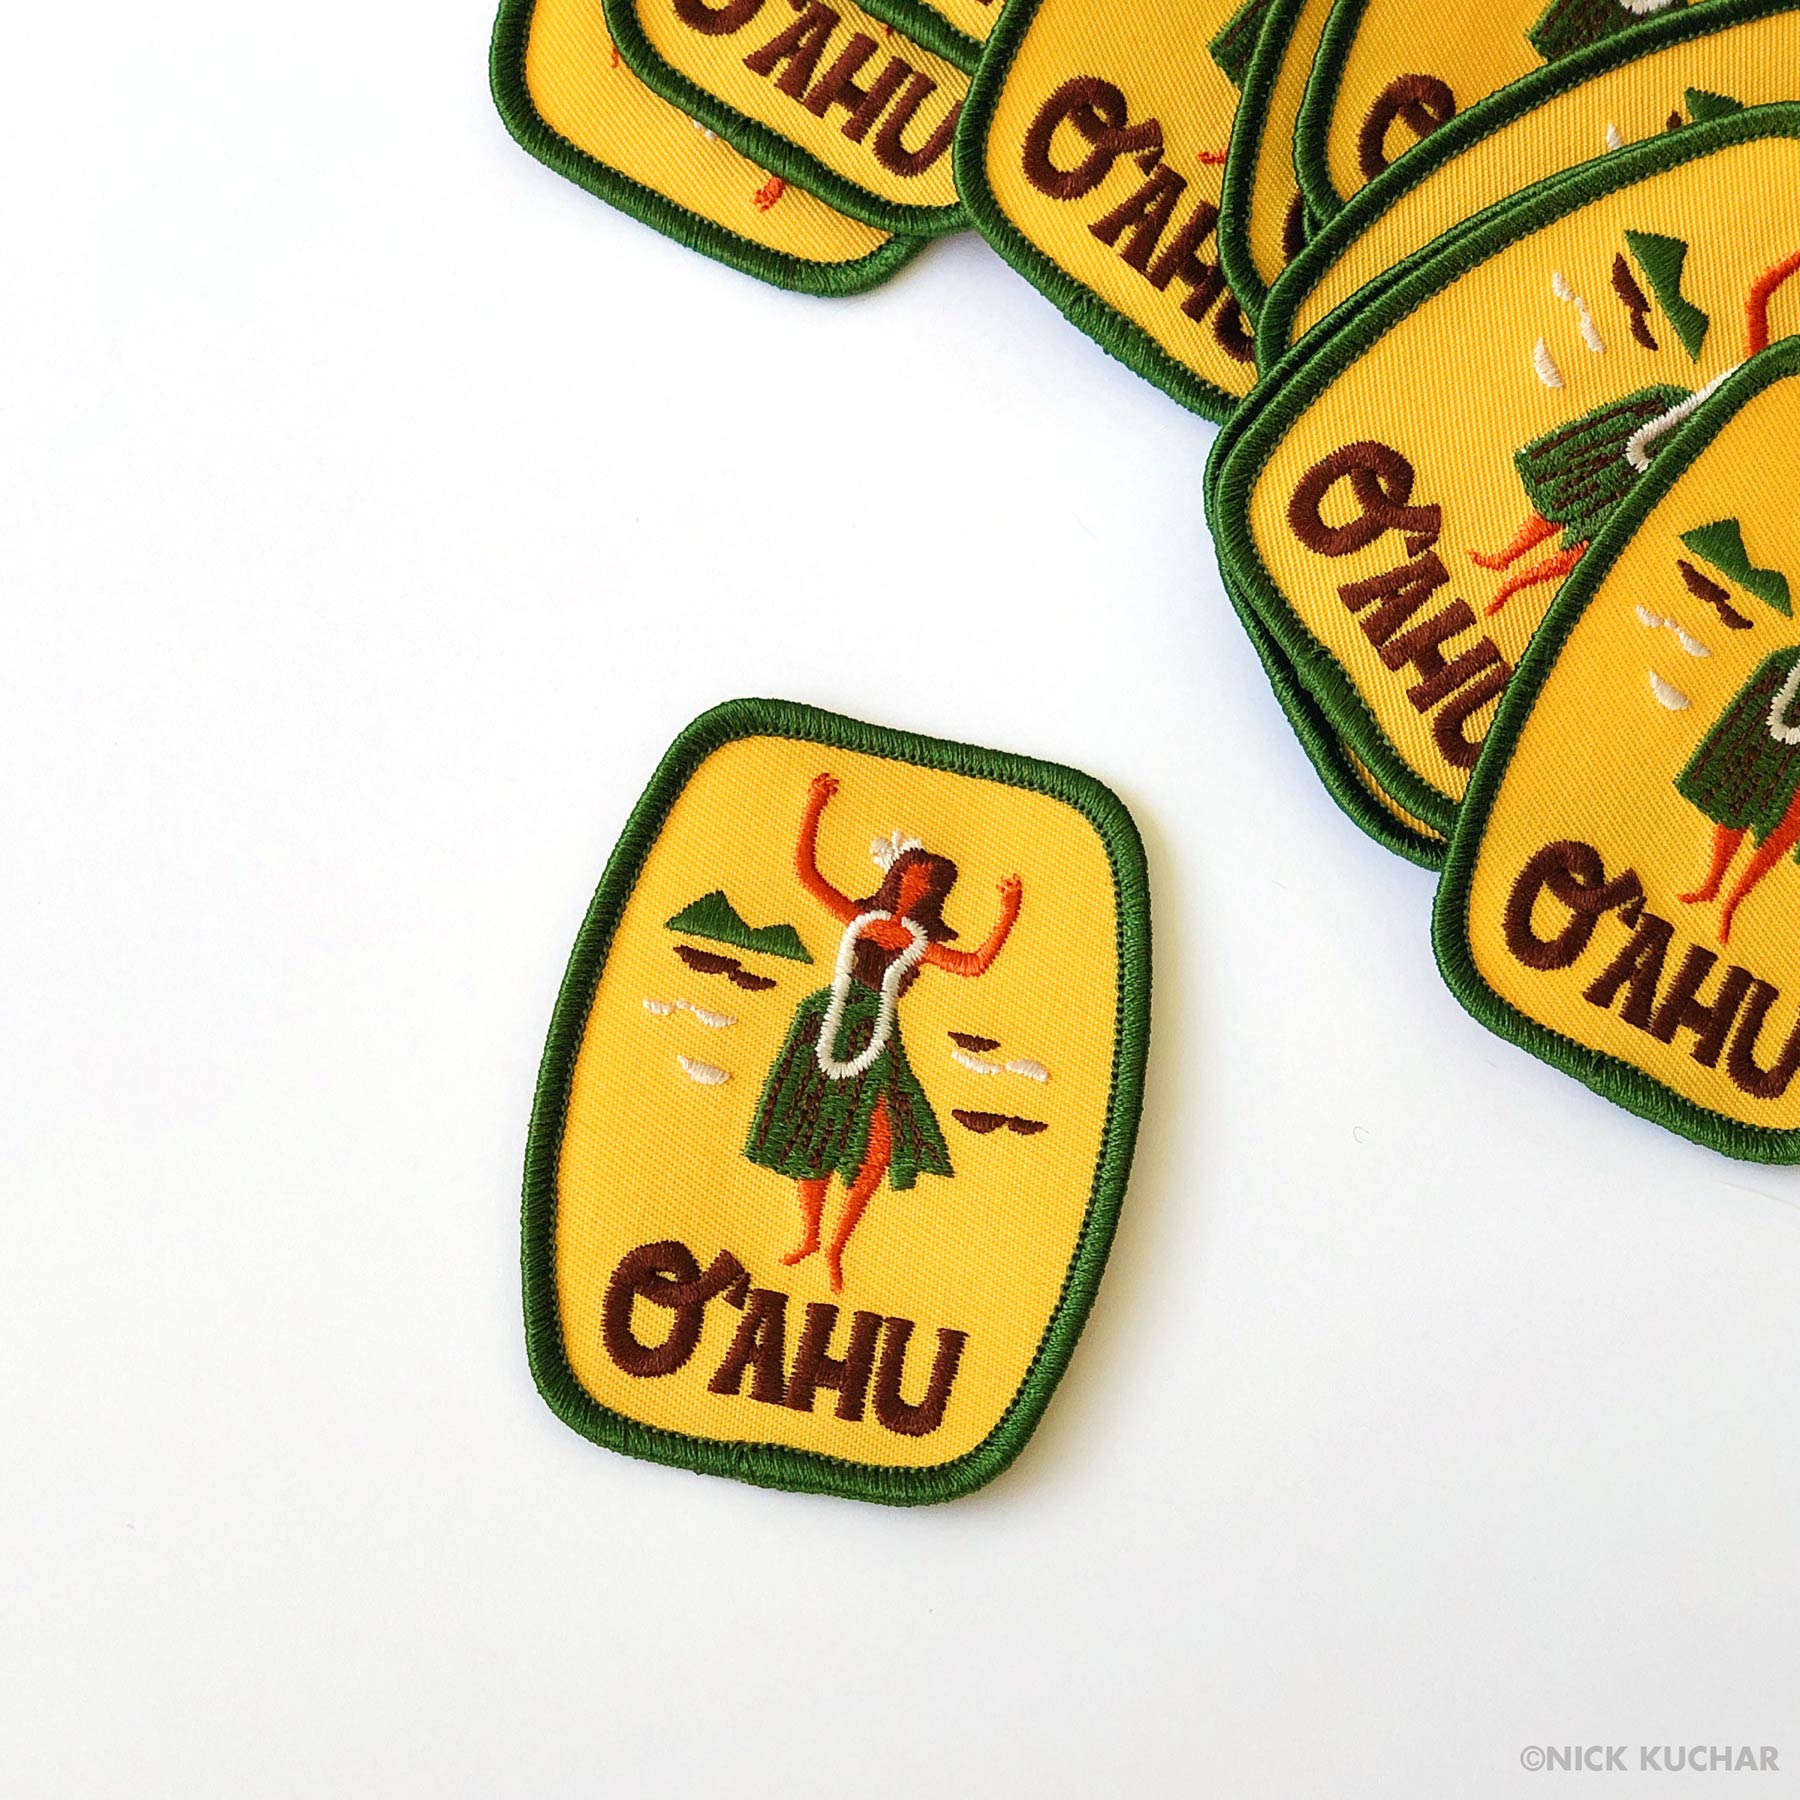 Hula dancer mokulua islands Oahu embroidered patch design by Nick Kuchar